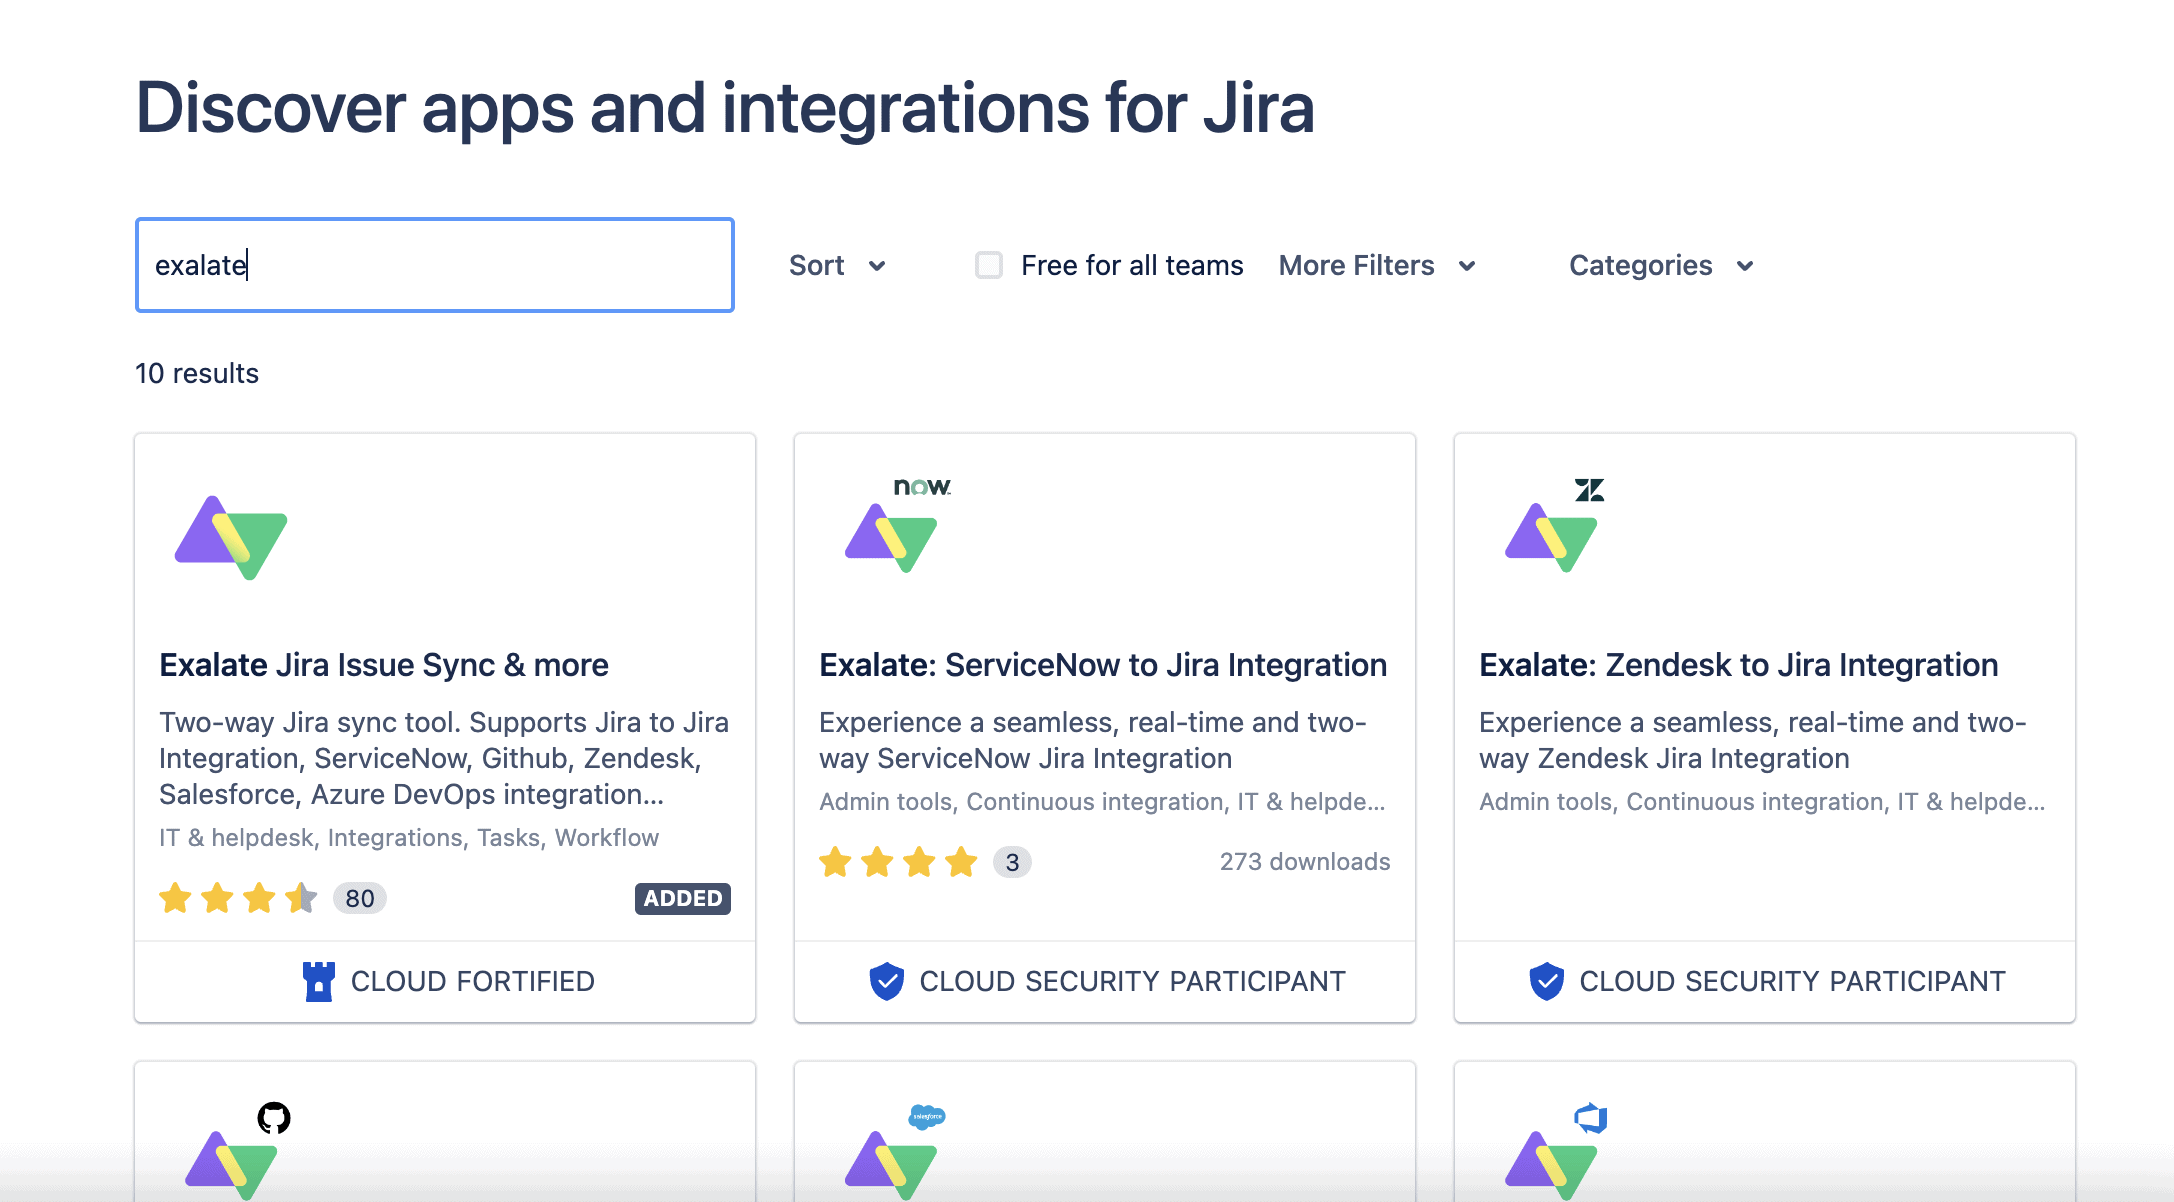 exalate app for Jira 